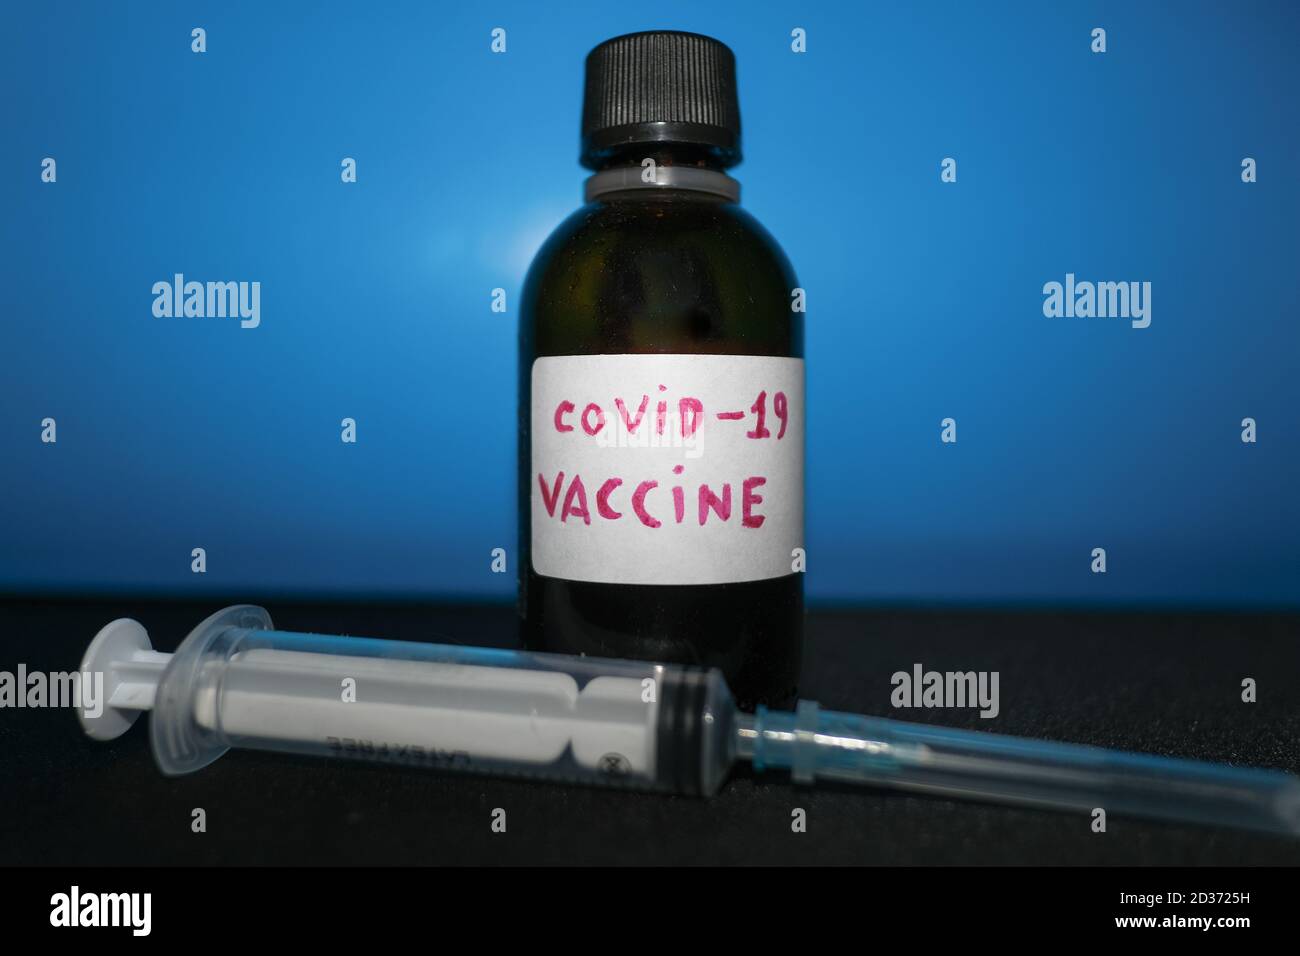 Covid19 testing vaccine container and empty syringe,coronavirus pandemic disease treatment Stock Photo